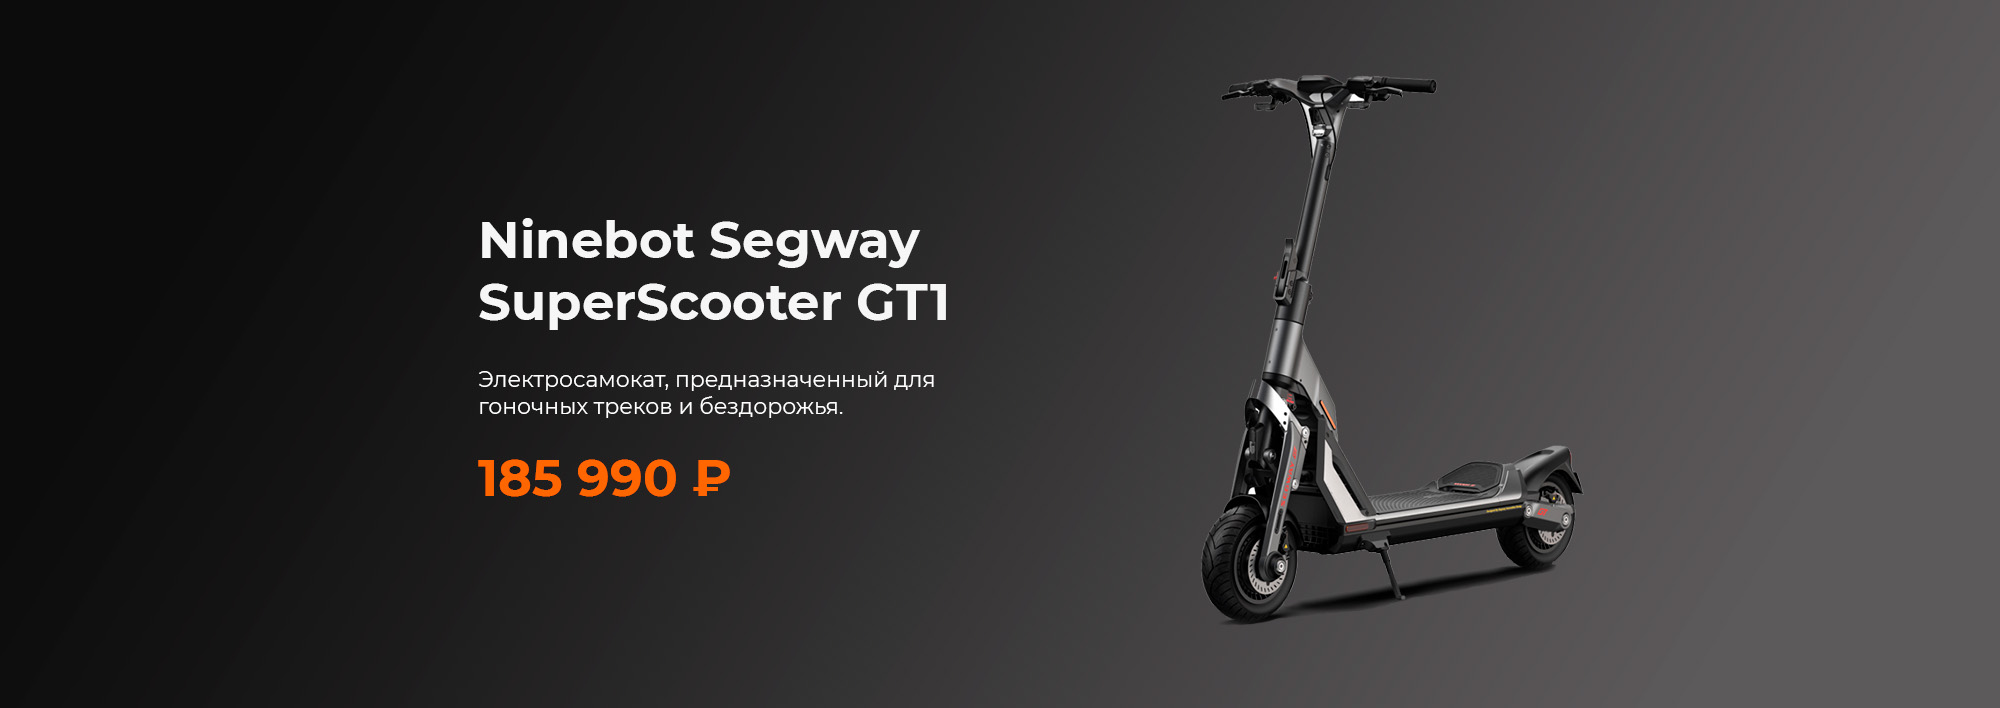 Ninebot Segway SuperScooter GT1